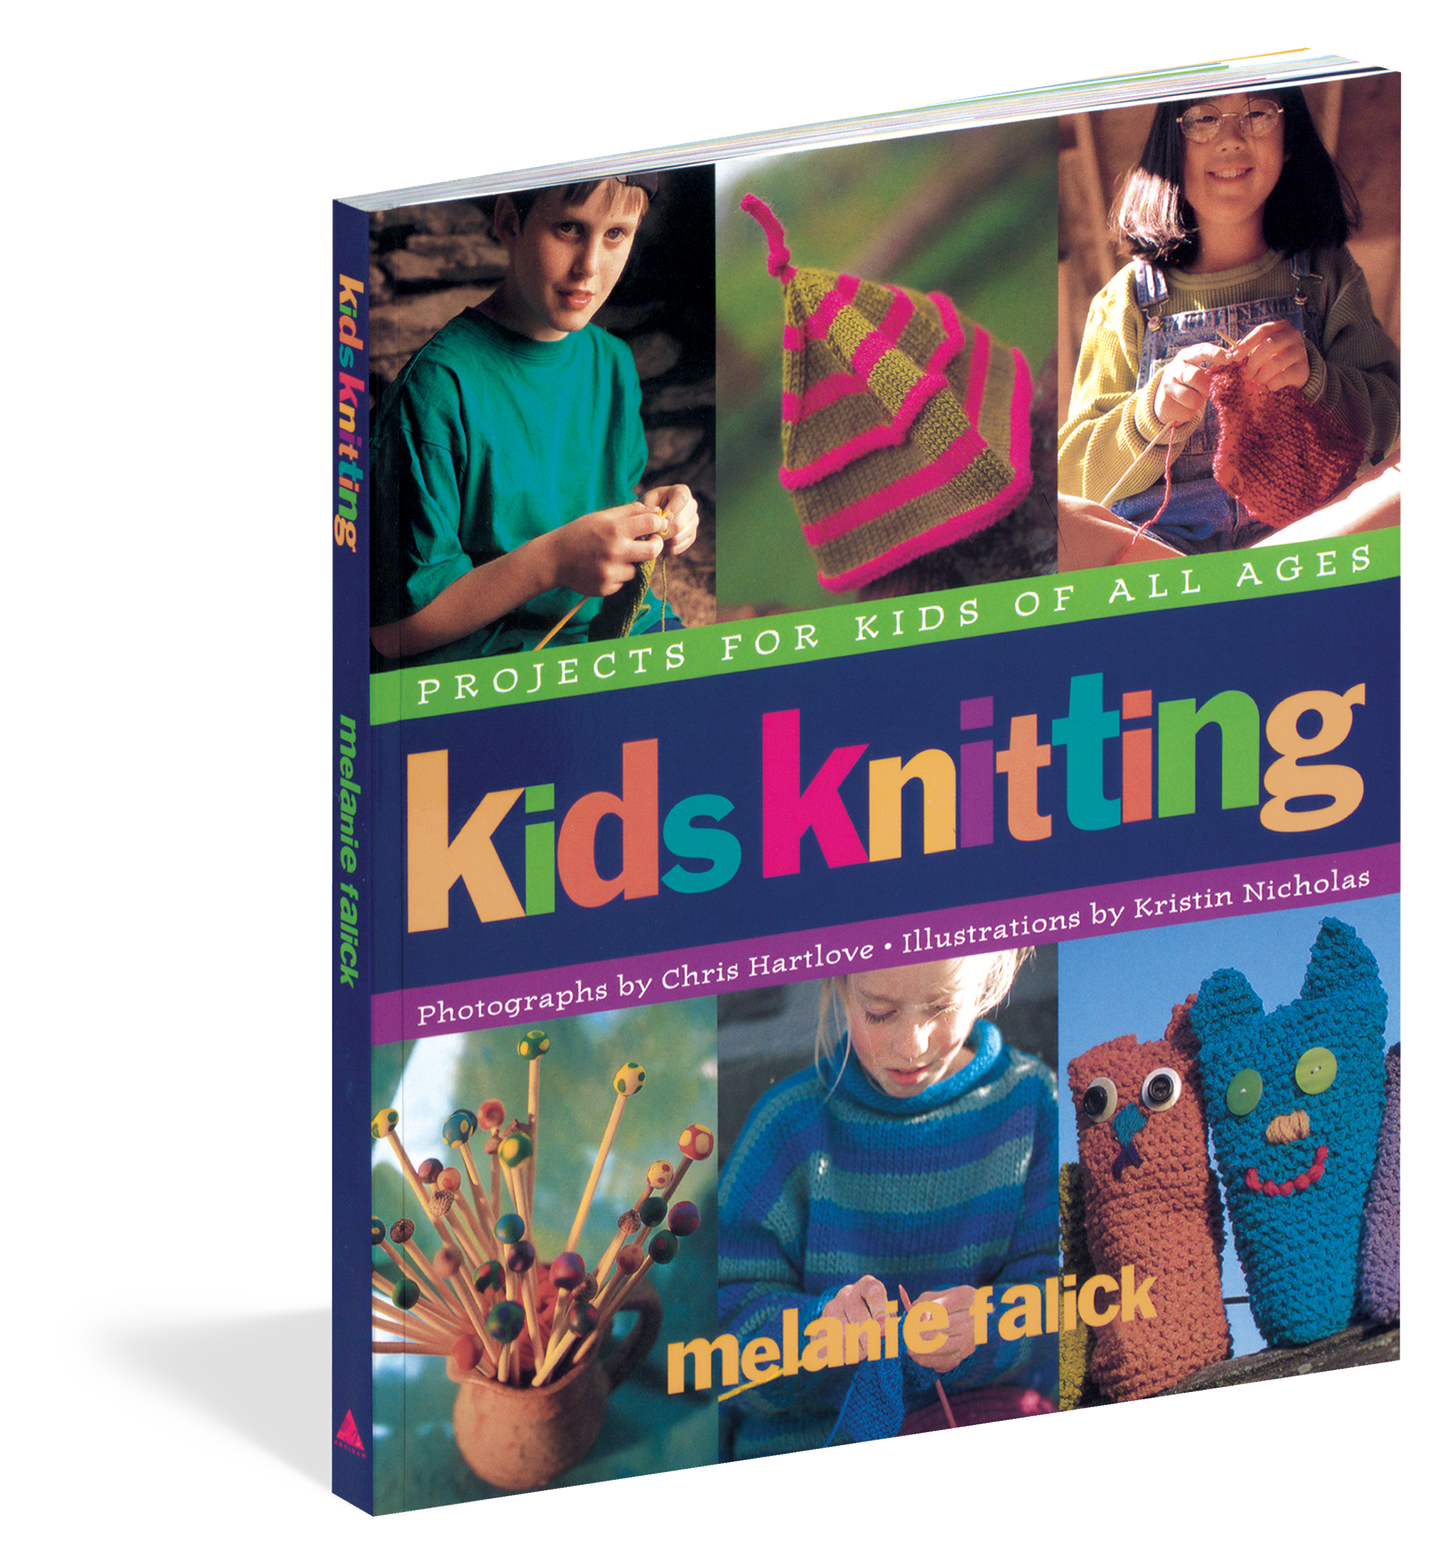 Book - Kids Knitting